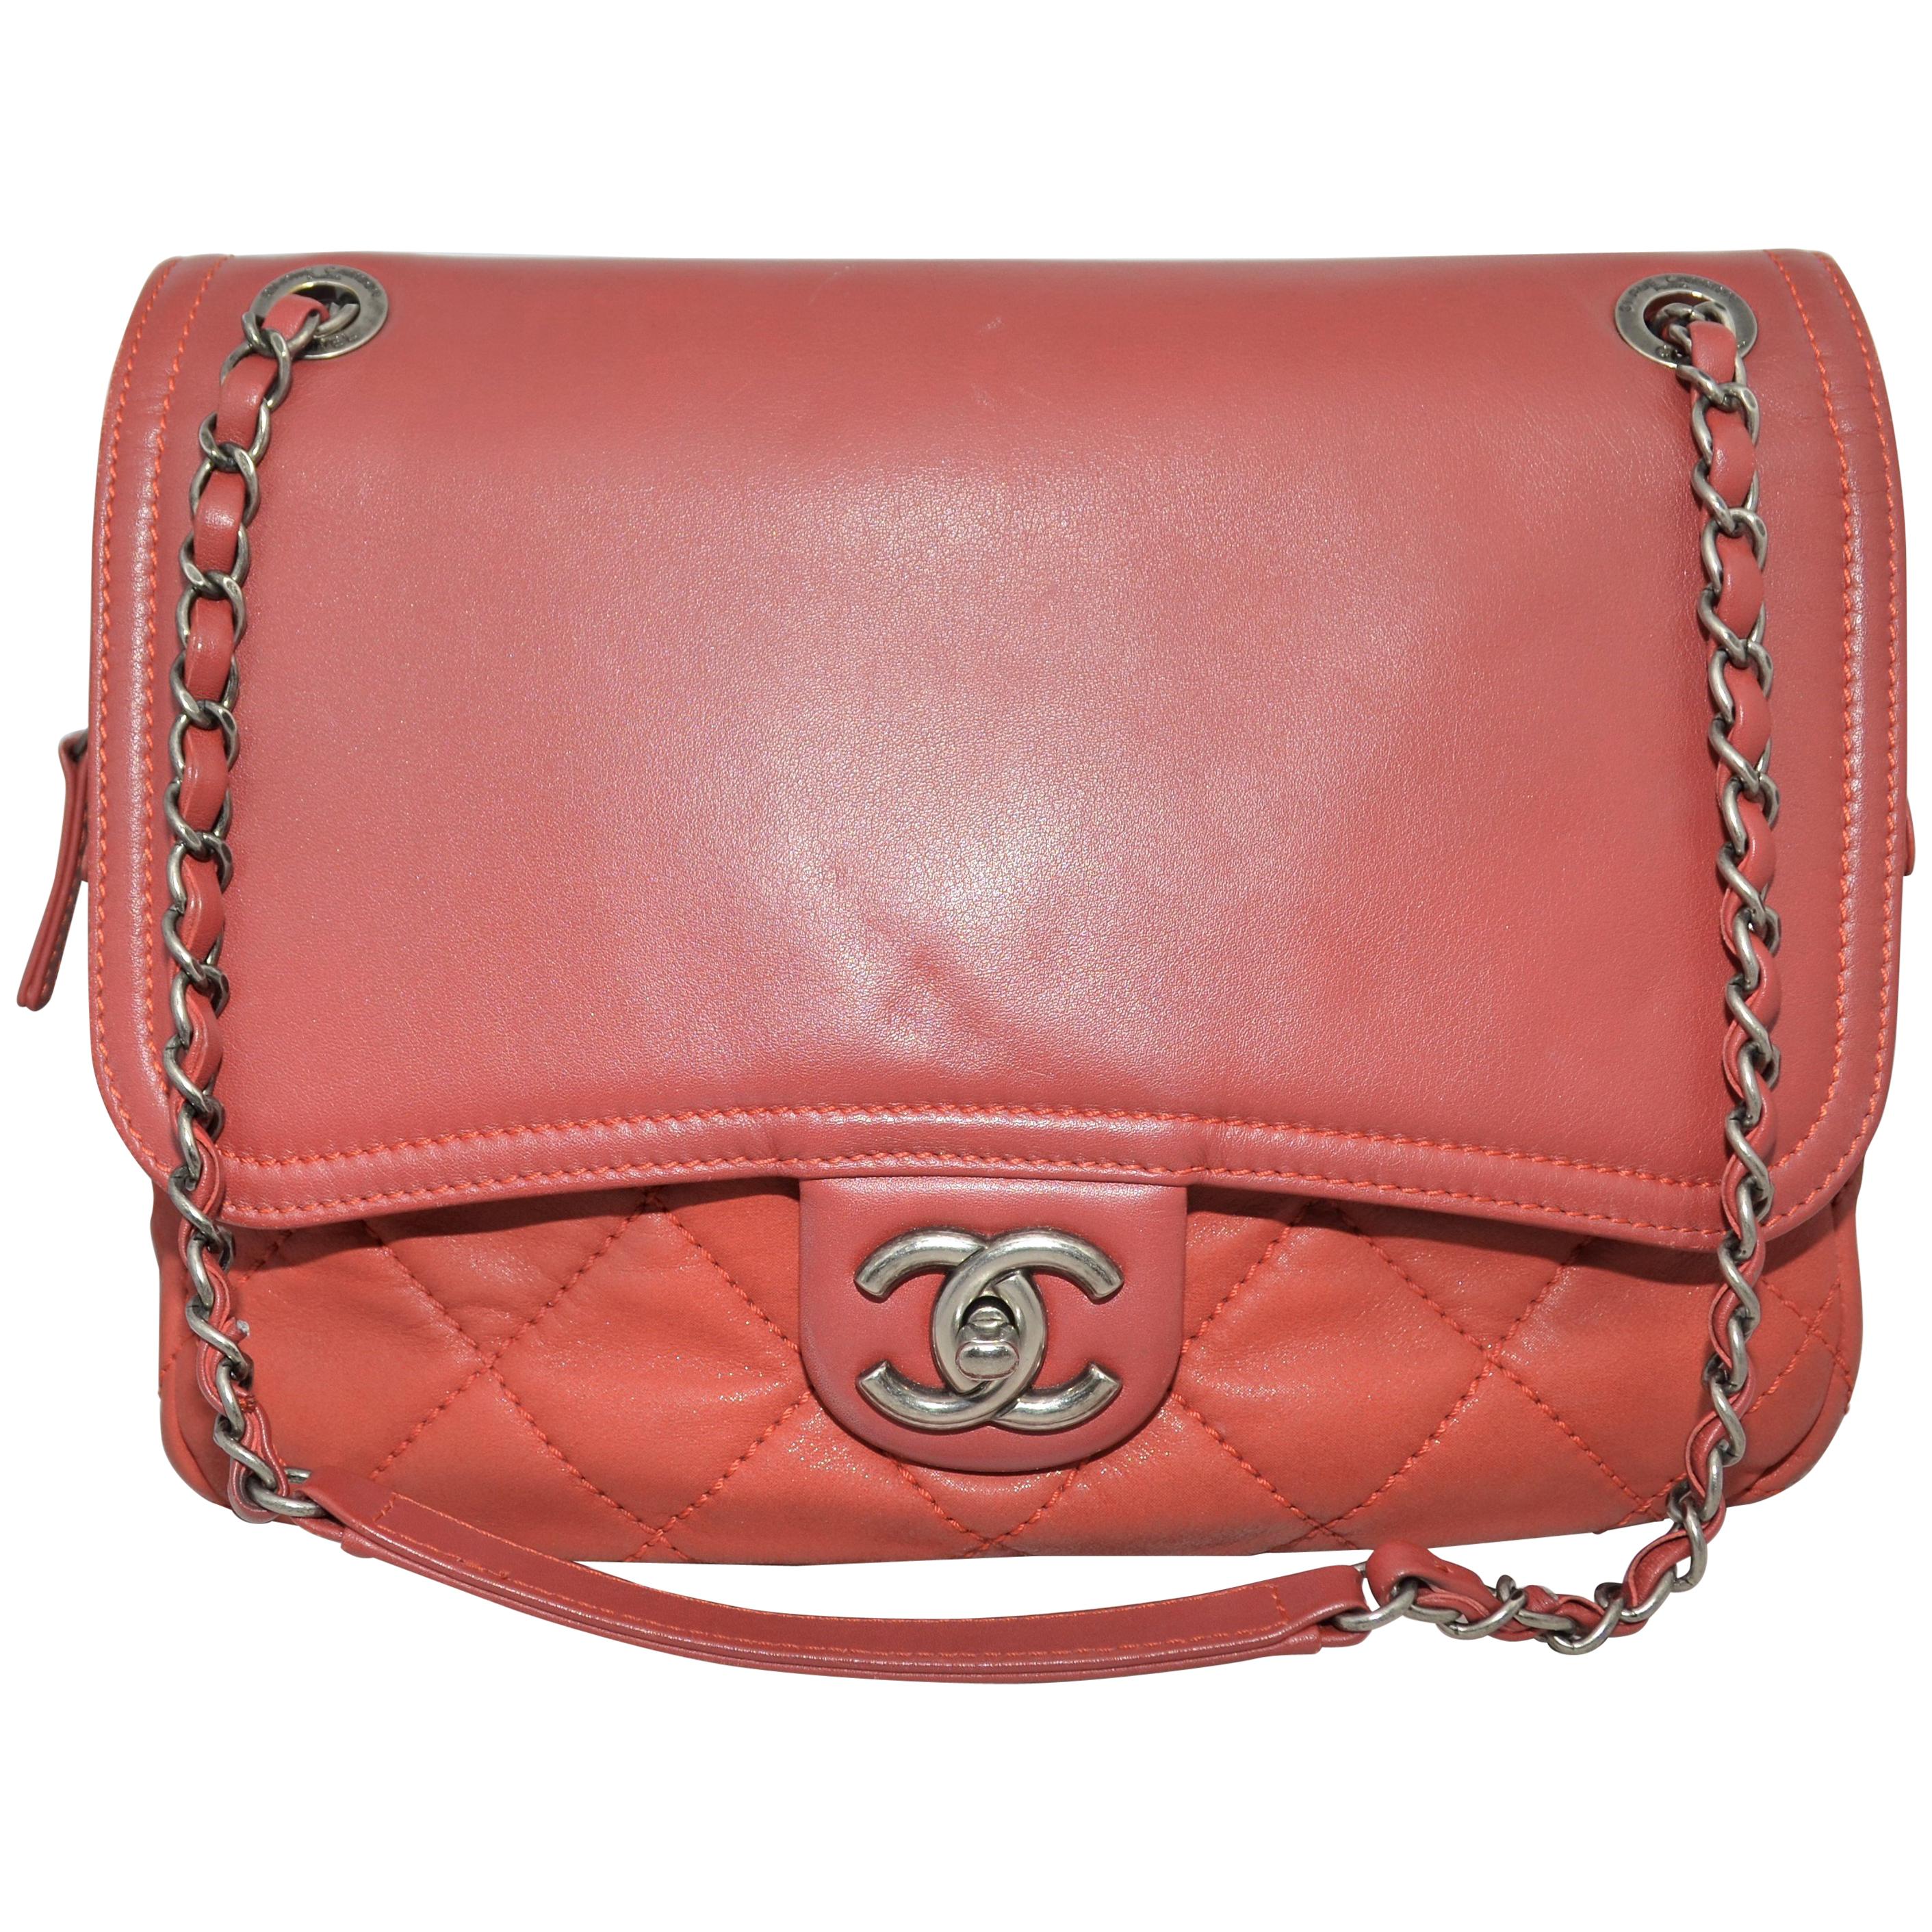 2011-2012 Chanel Quilted Reissue Shoulder Bag